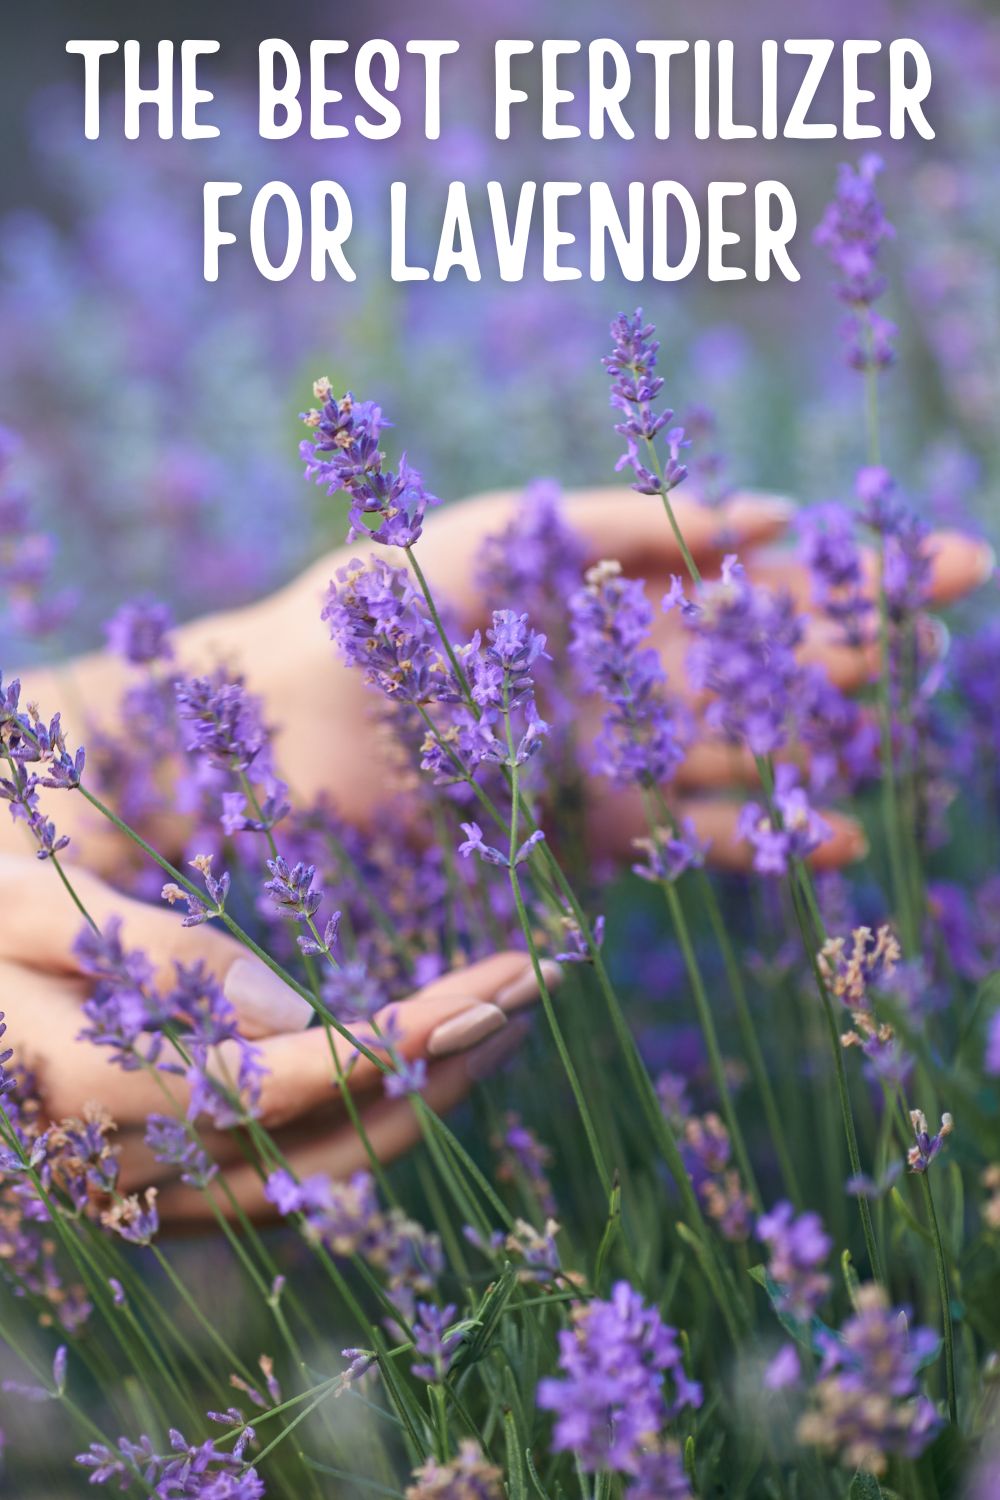 The best fertilizer for lavender.